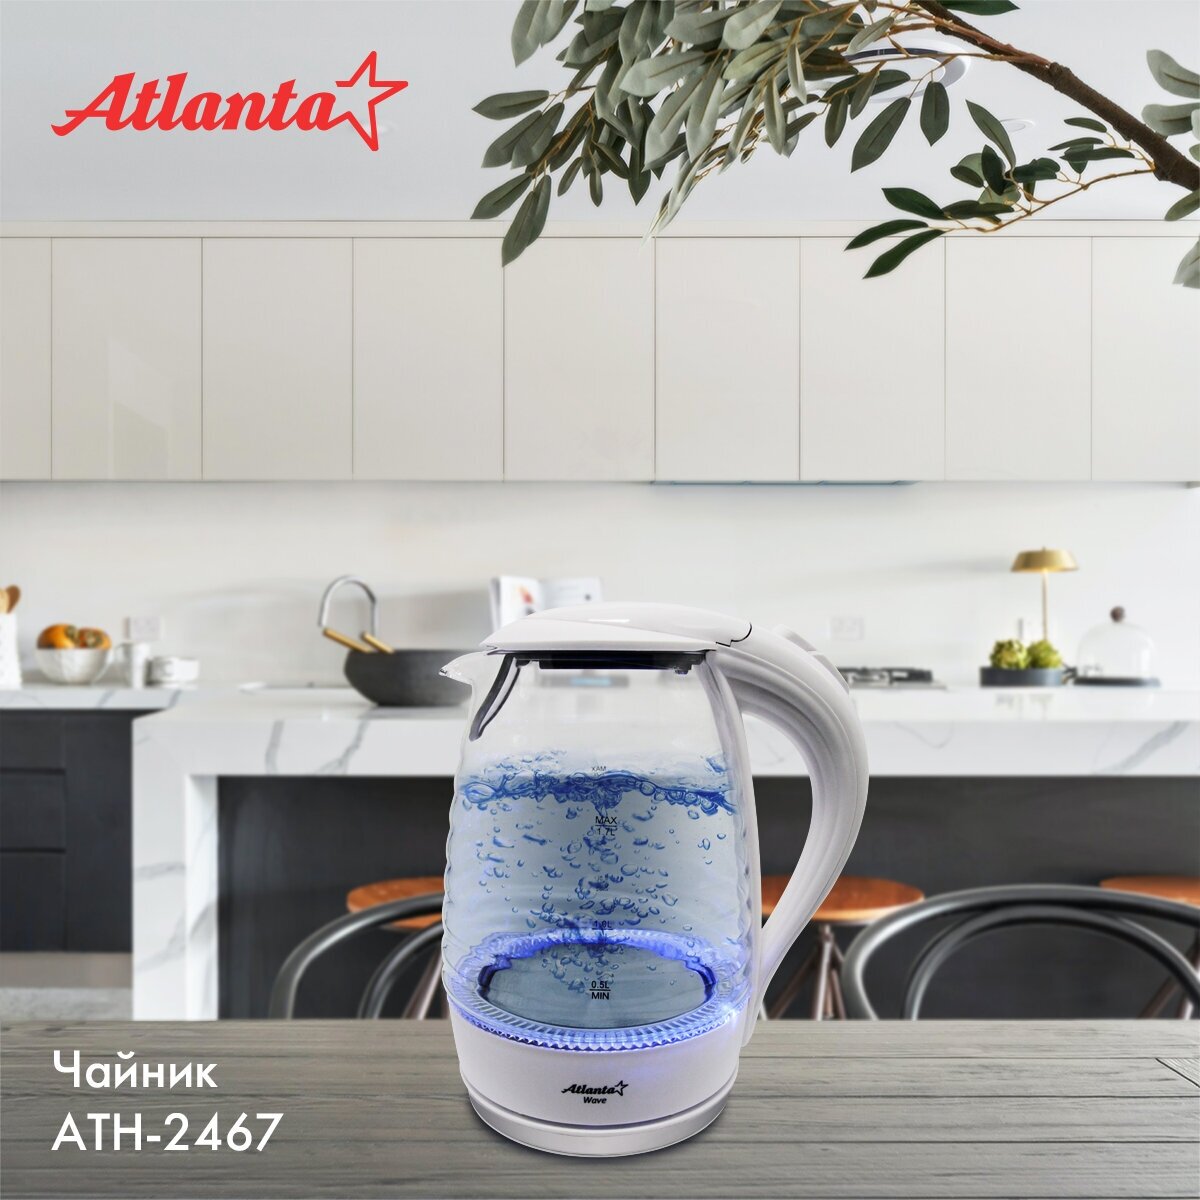 Электрический чайник Atlanta ATH-2467